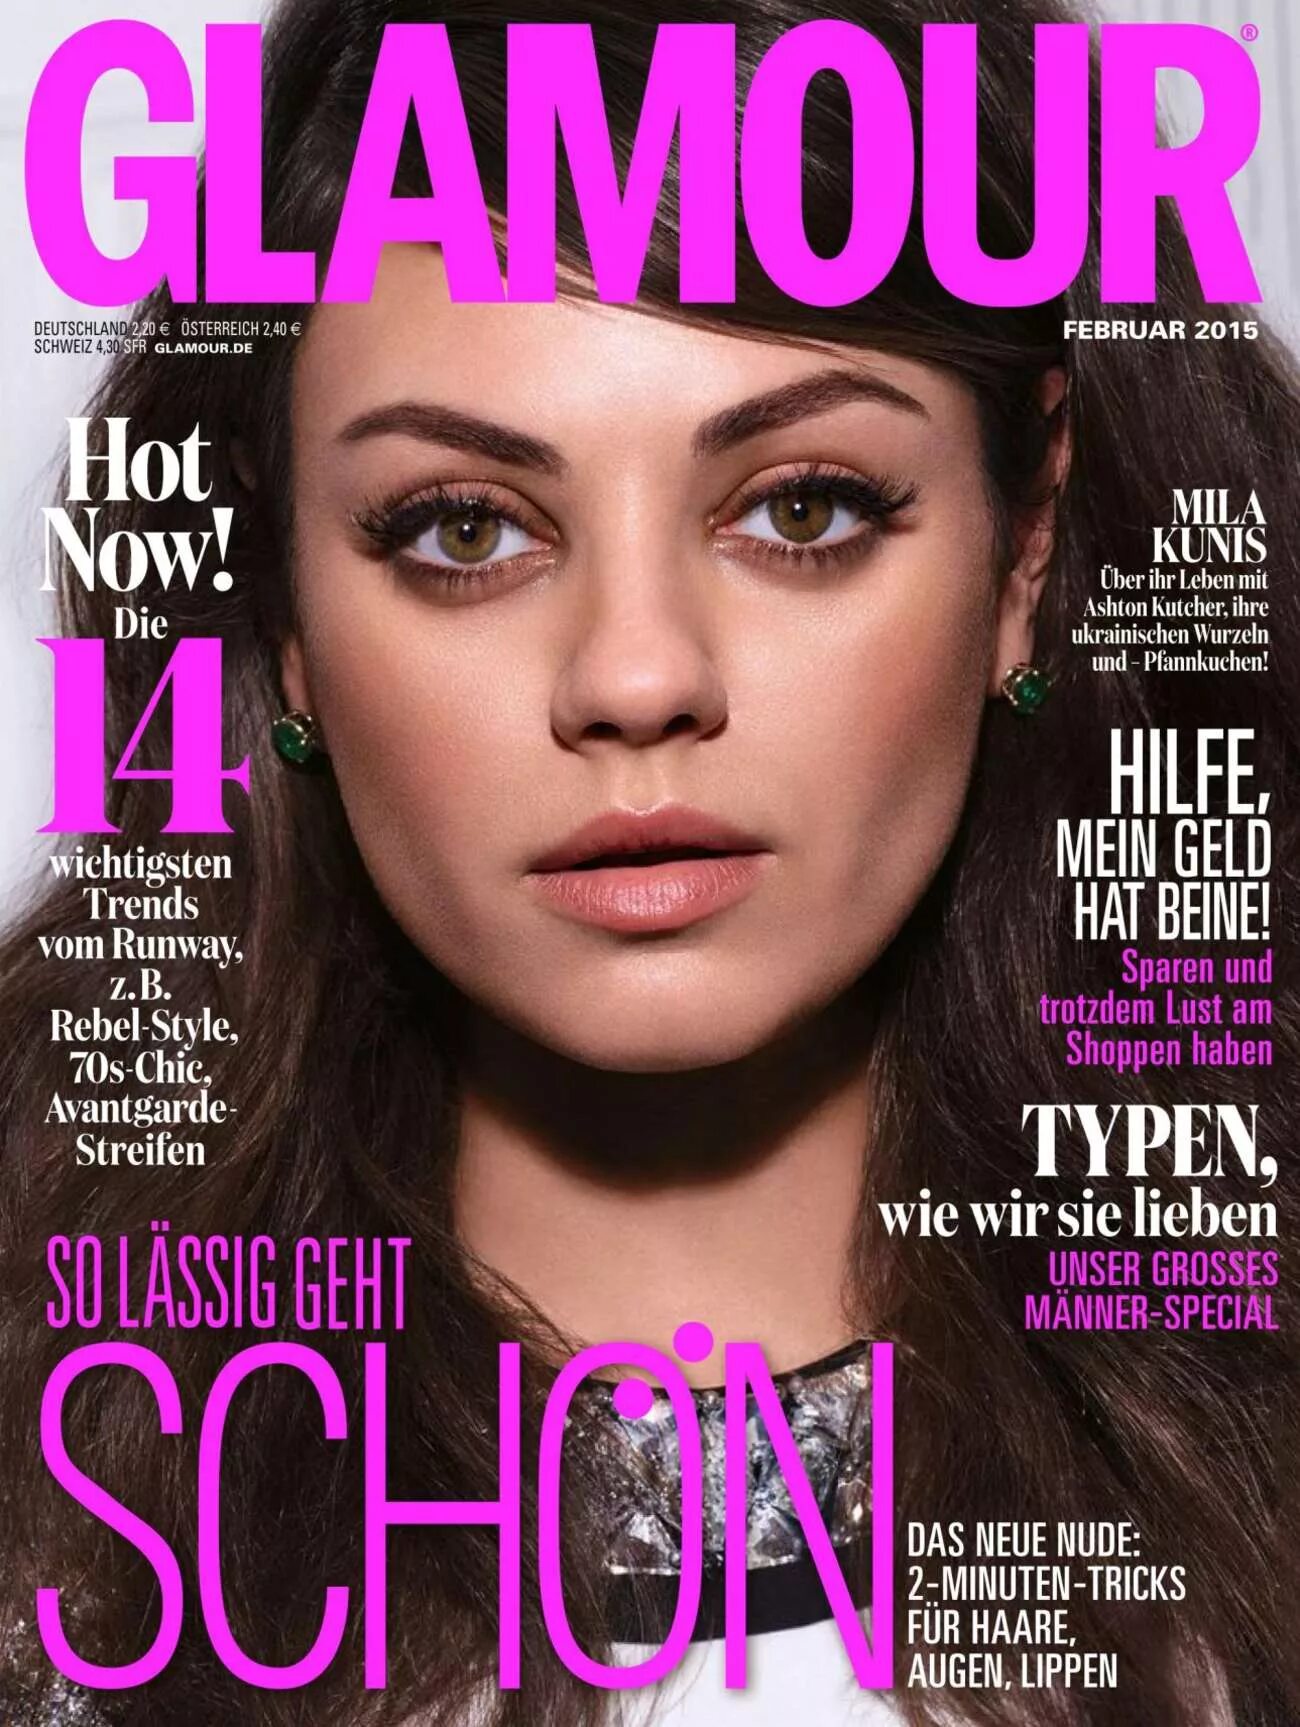 Glamour журнал. Обложка журнала Glamour. Гламурные журналы. Гламурный журнал обложка.